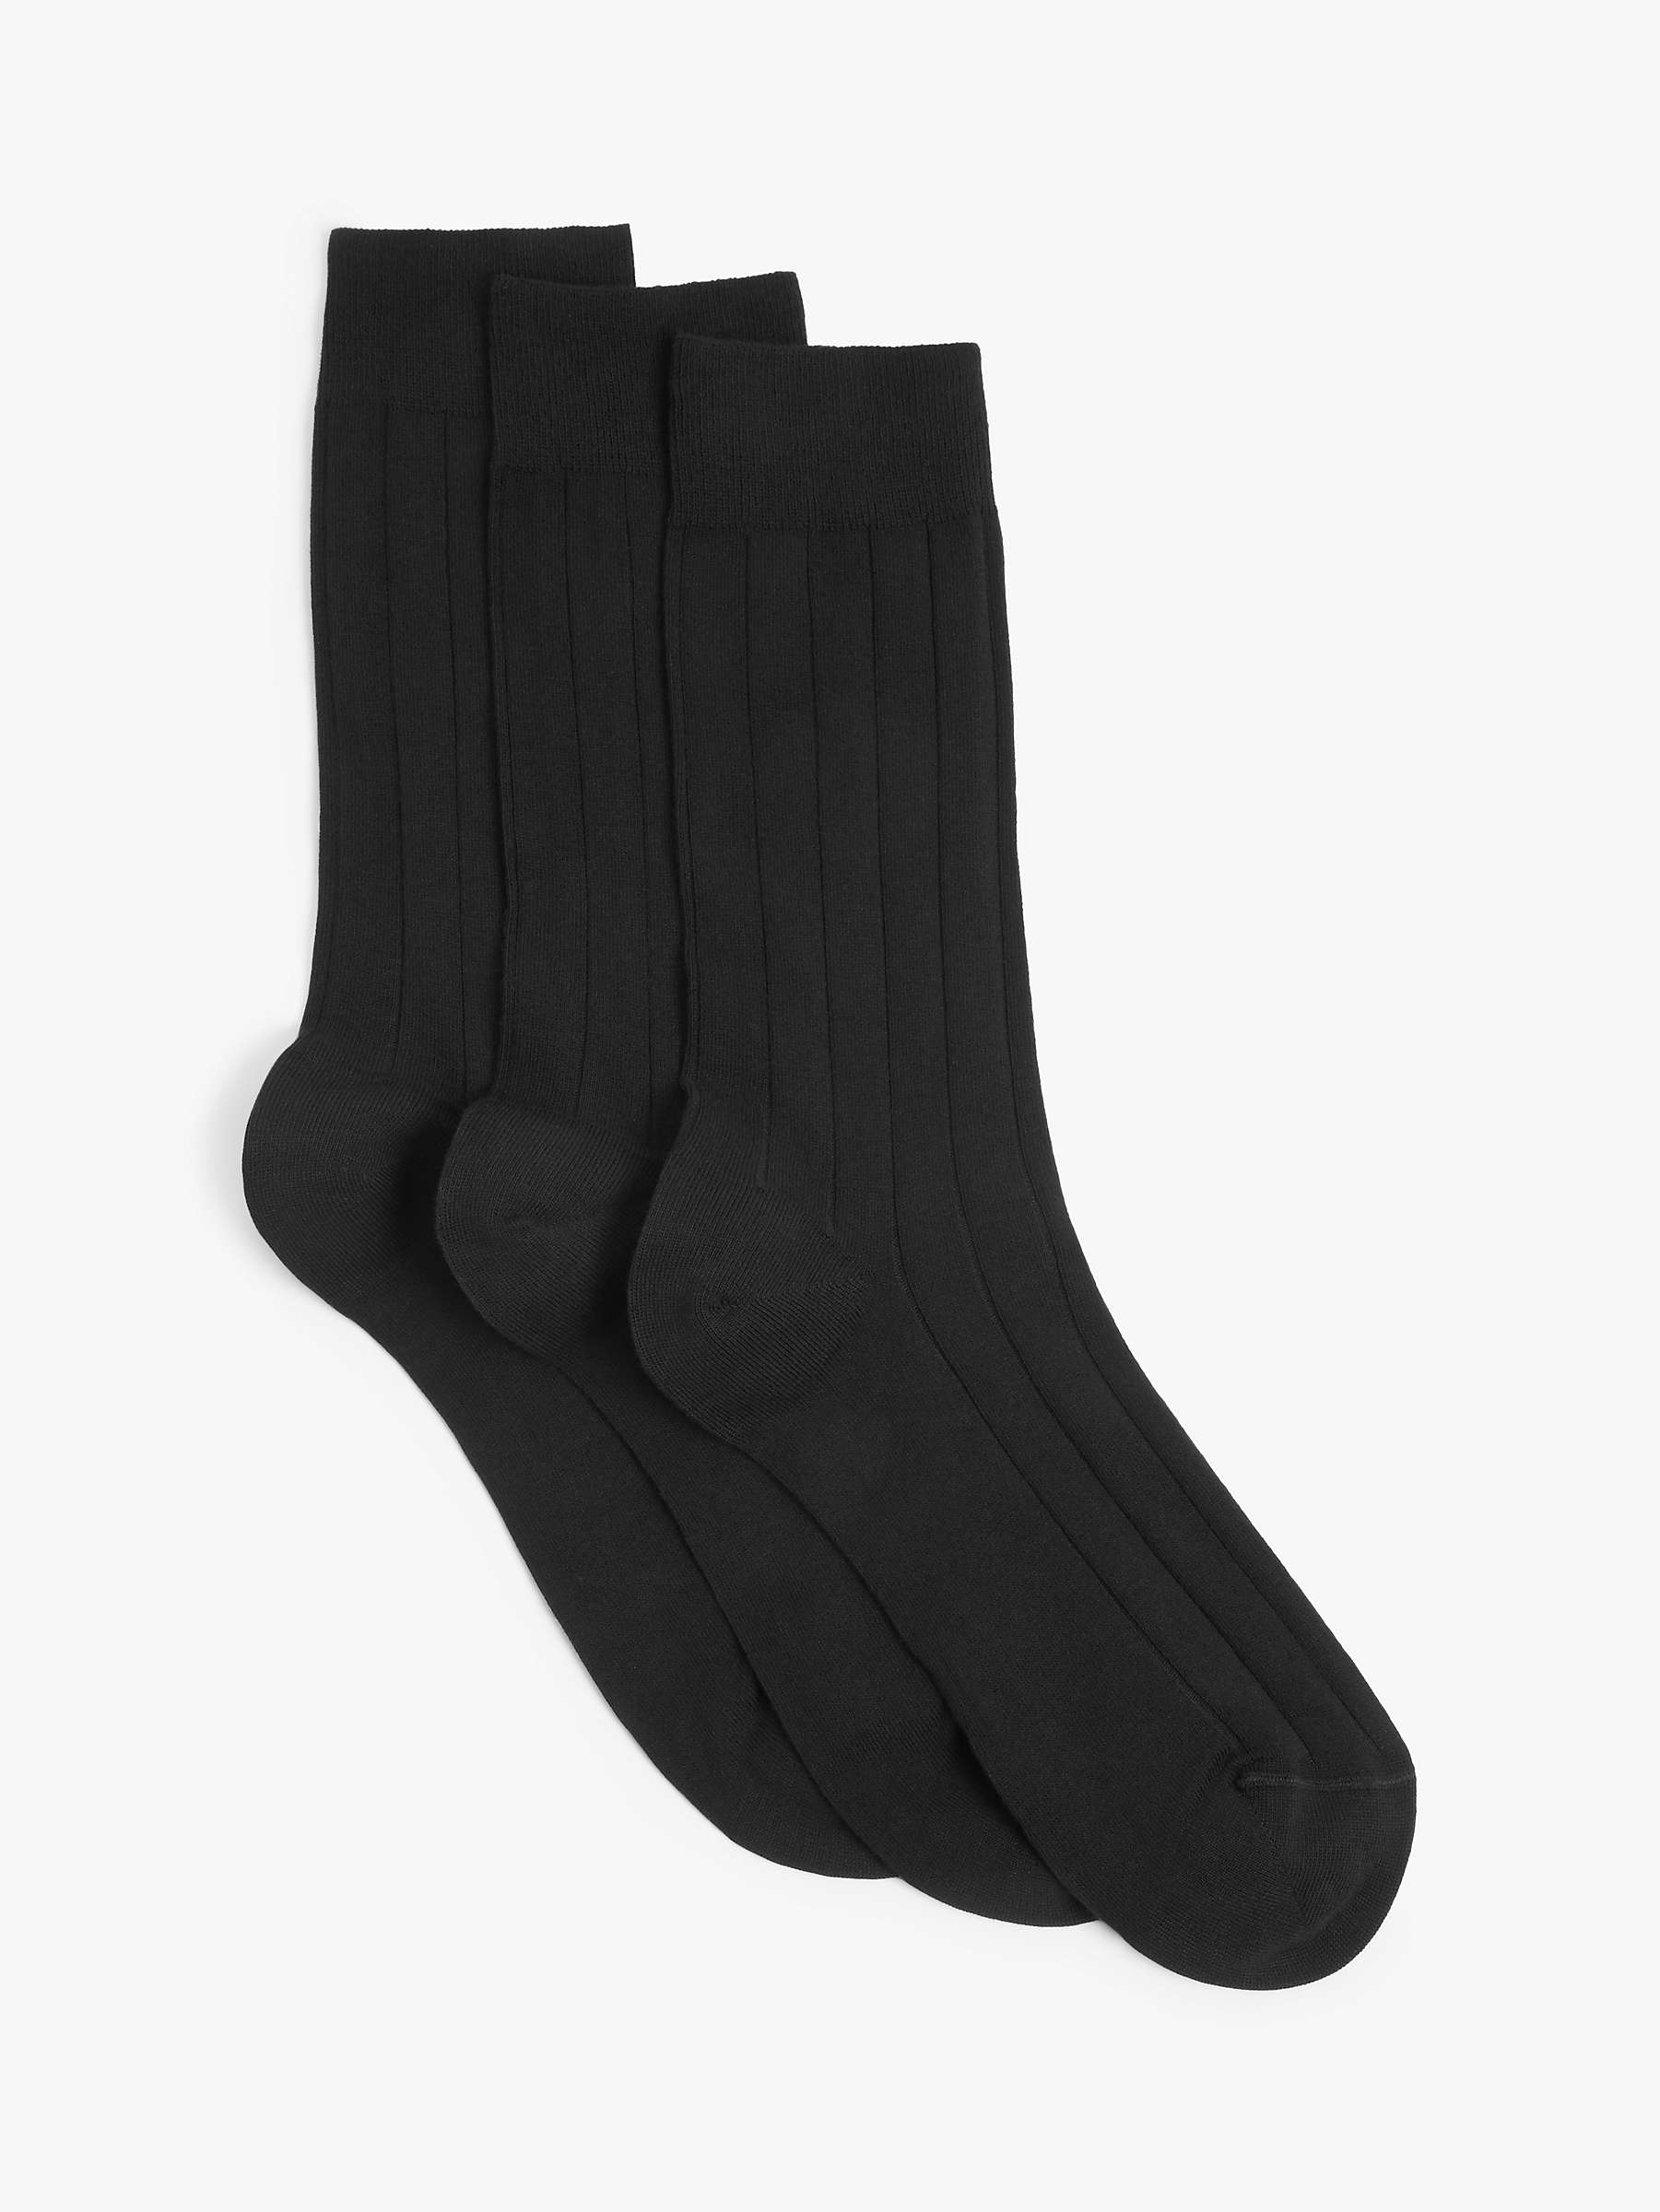 John Lewis Made in Italy Cotton Socks, Pack of 3, Black at John Lewis ...